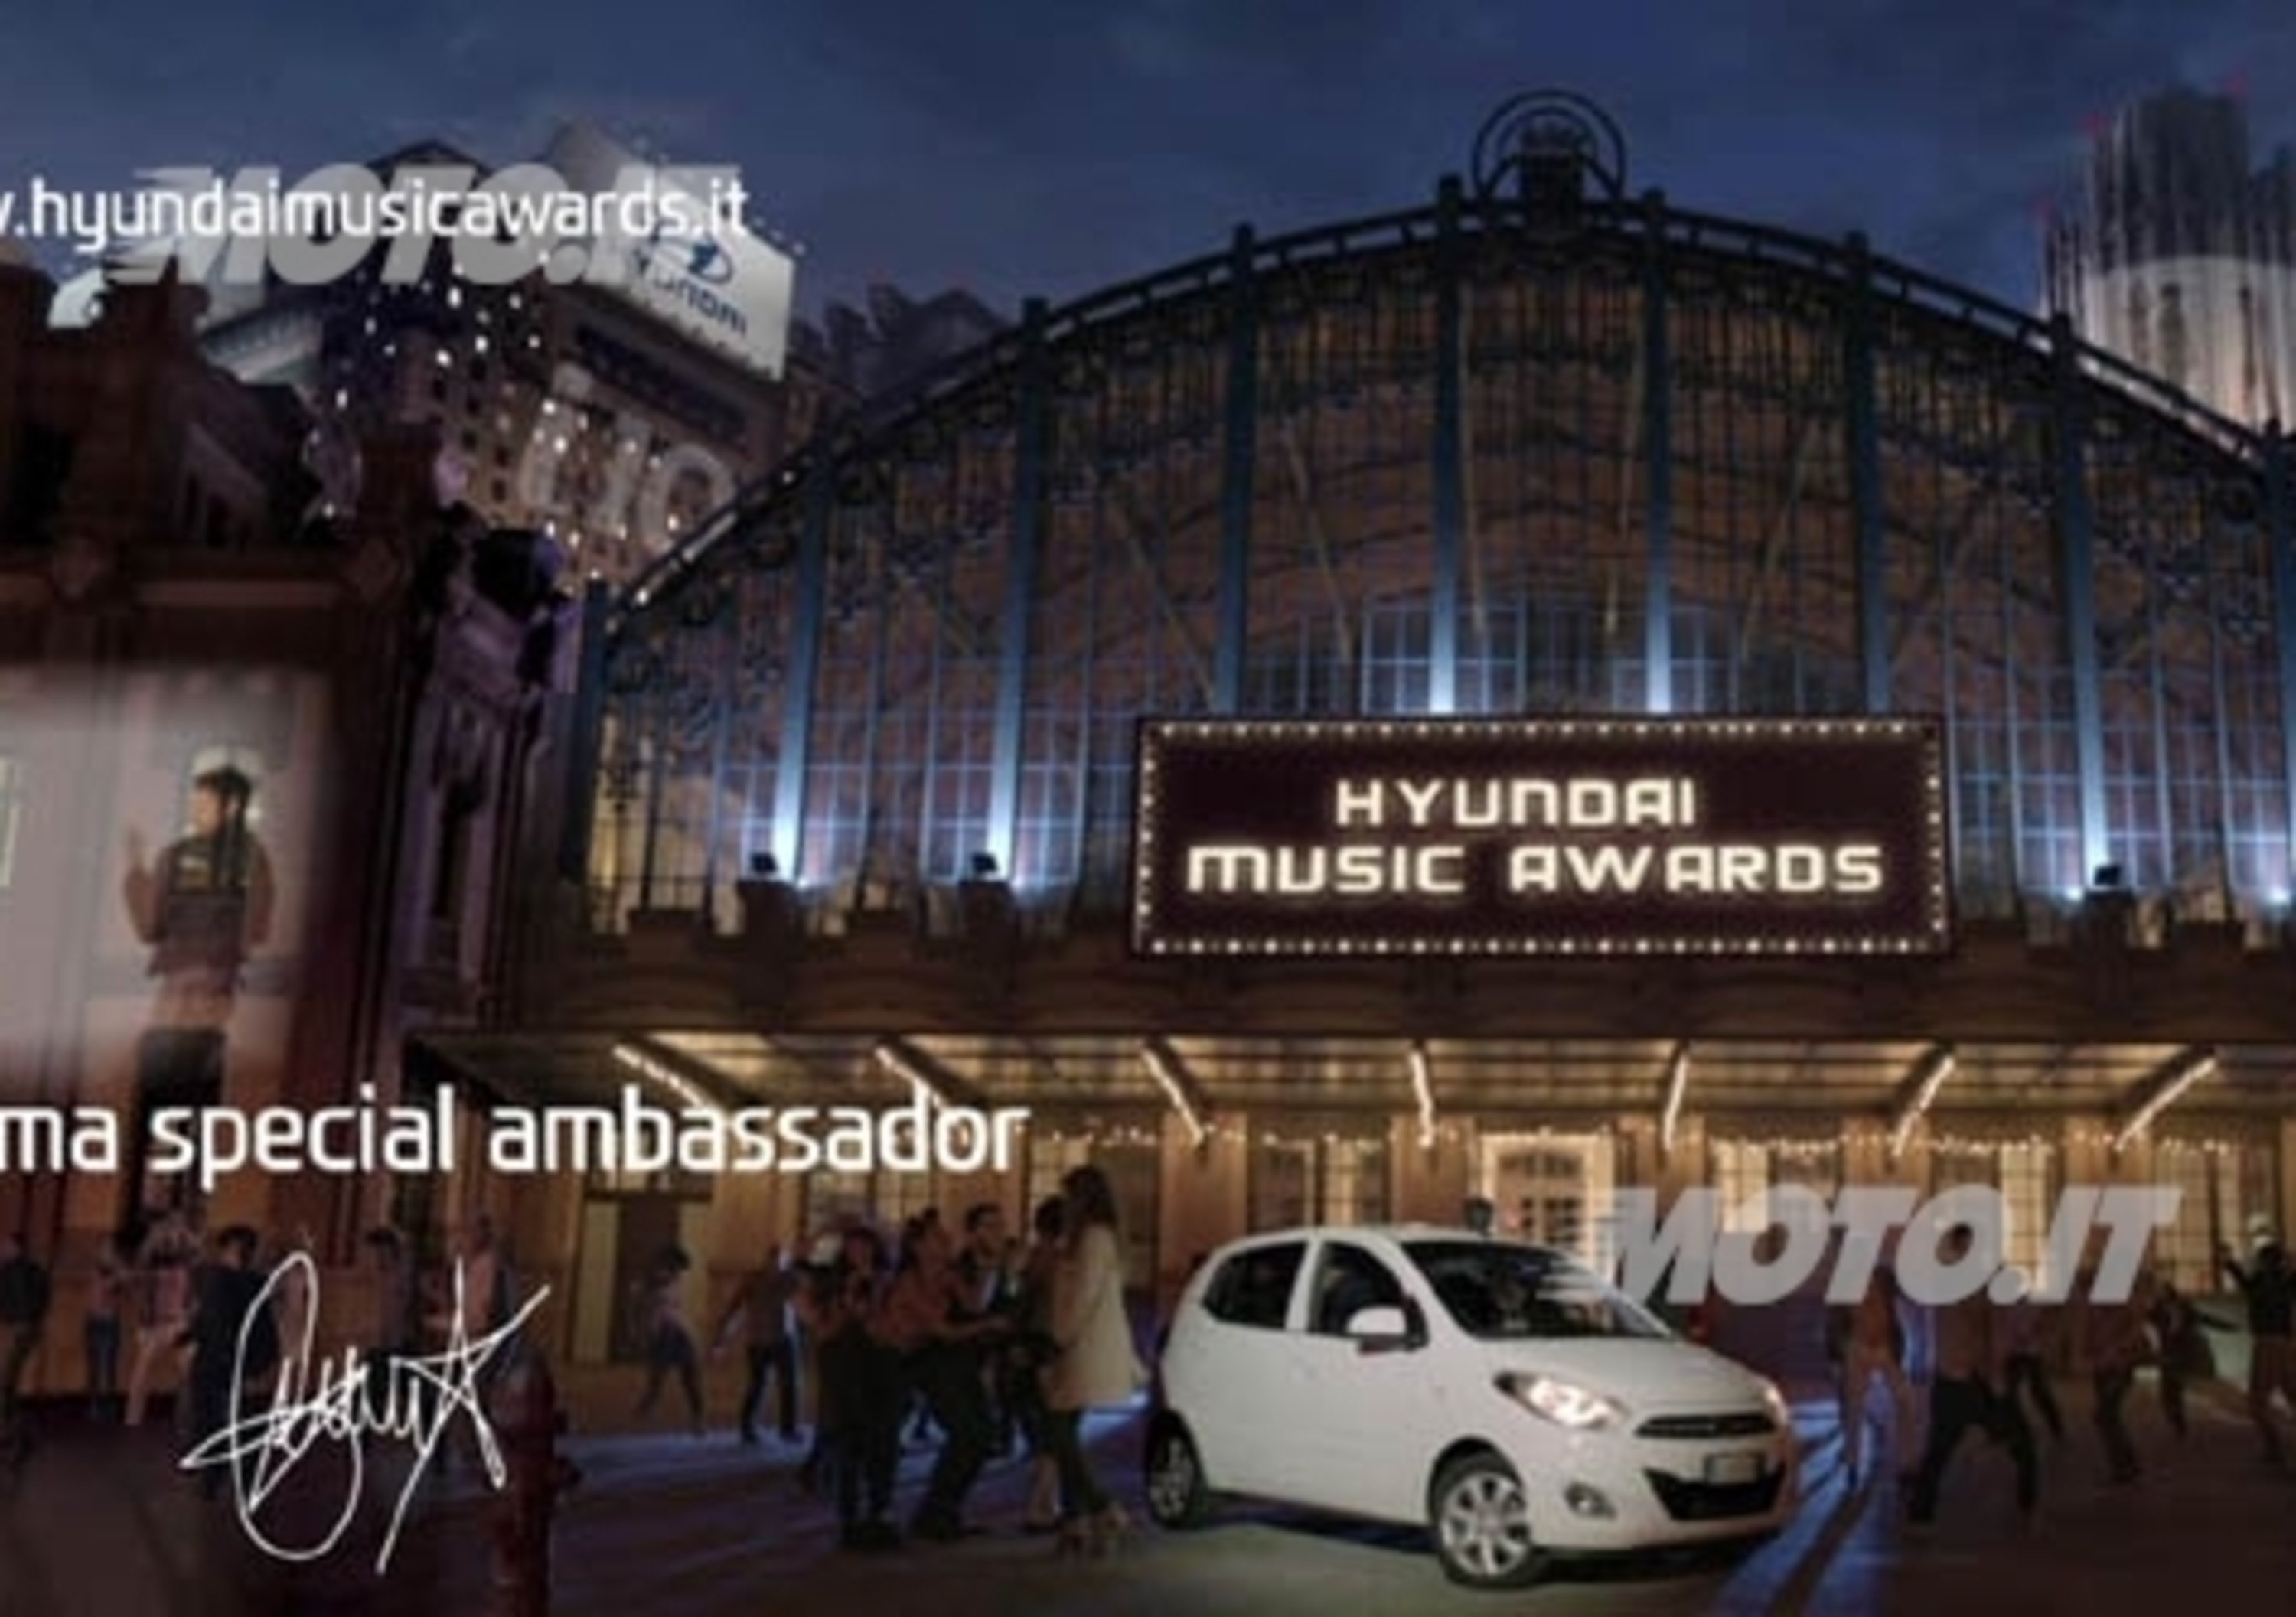 Hyundai i10 Sound Edition